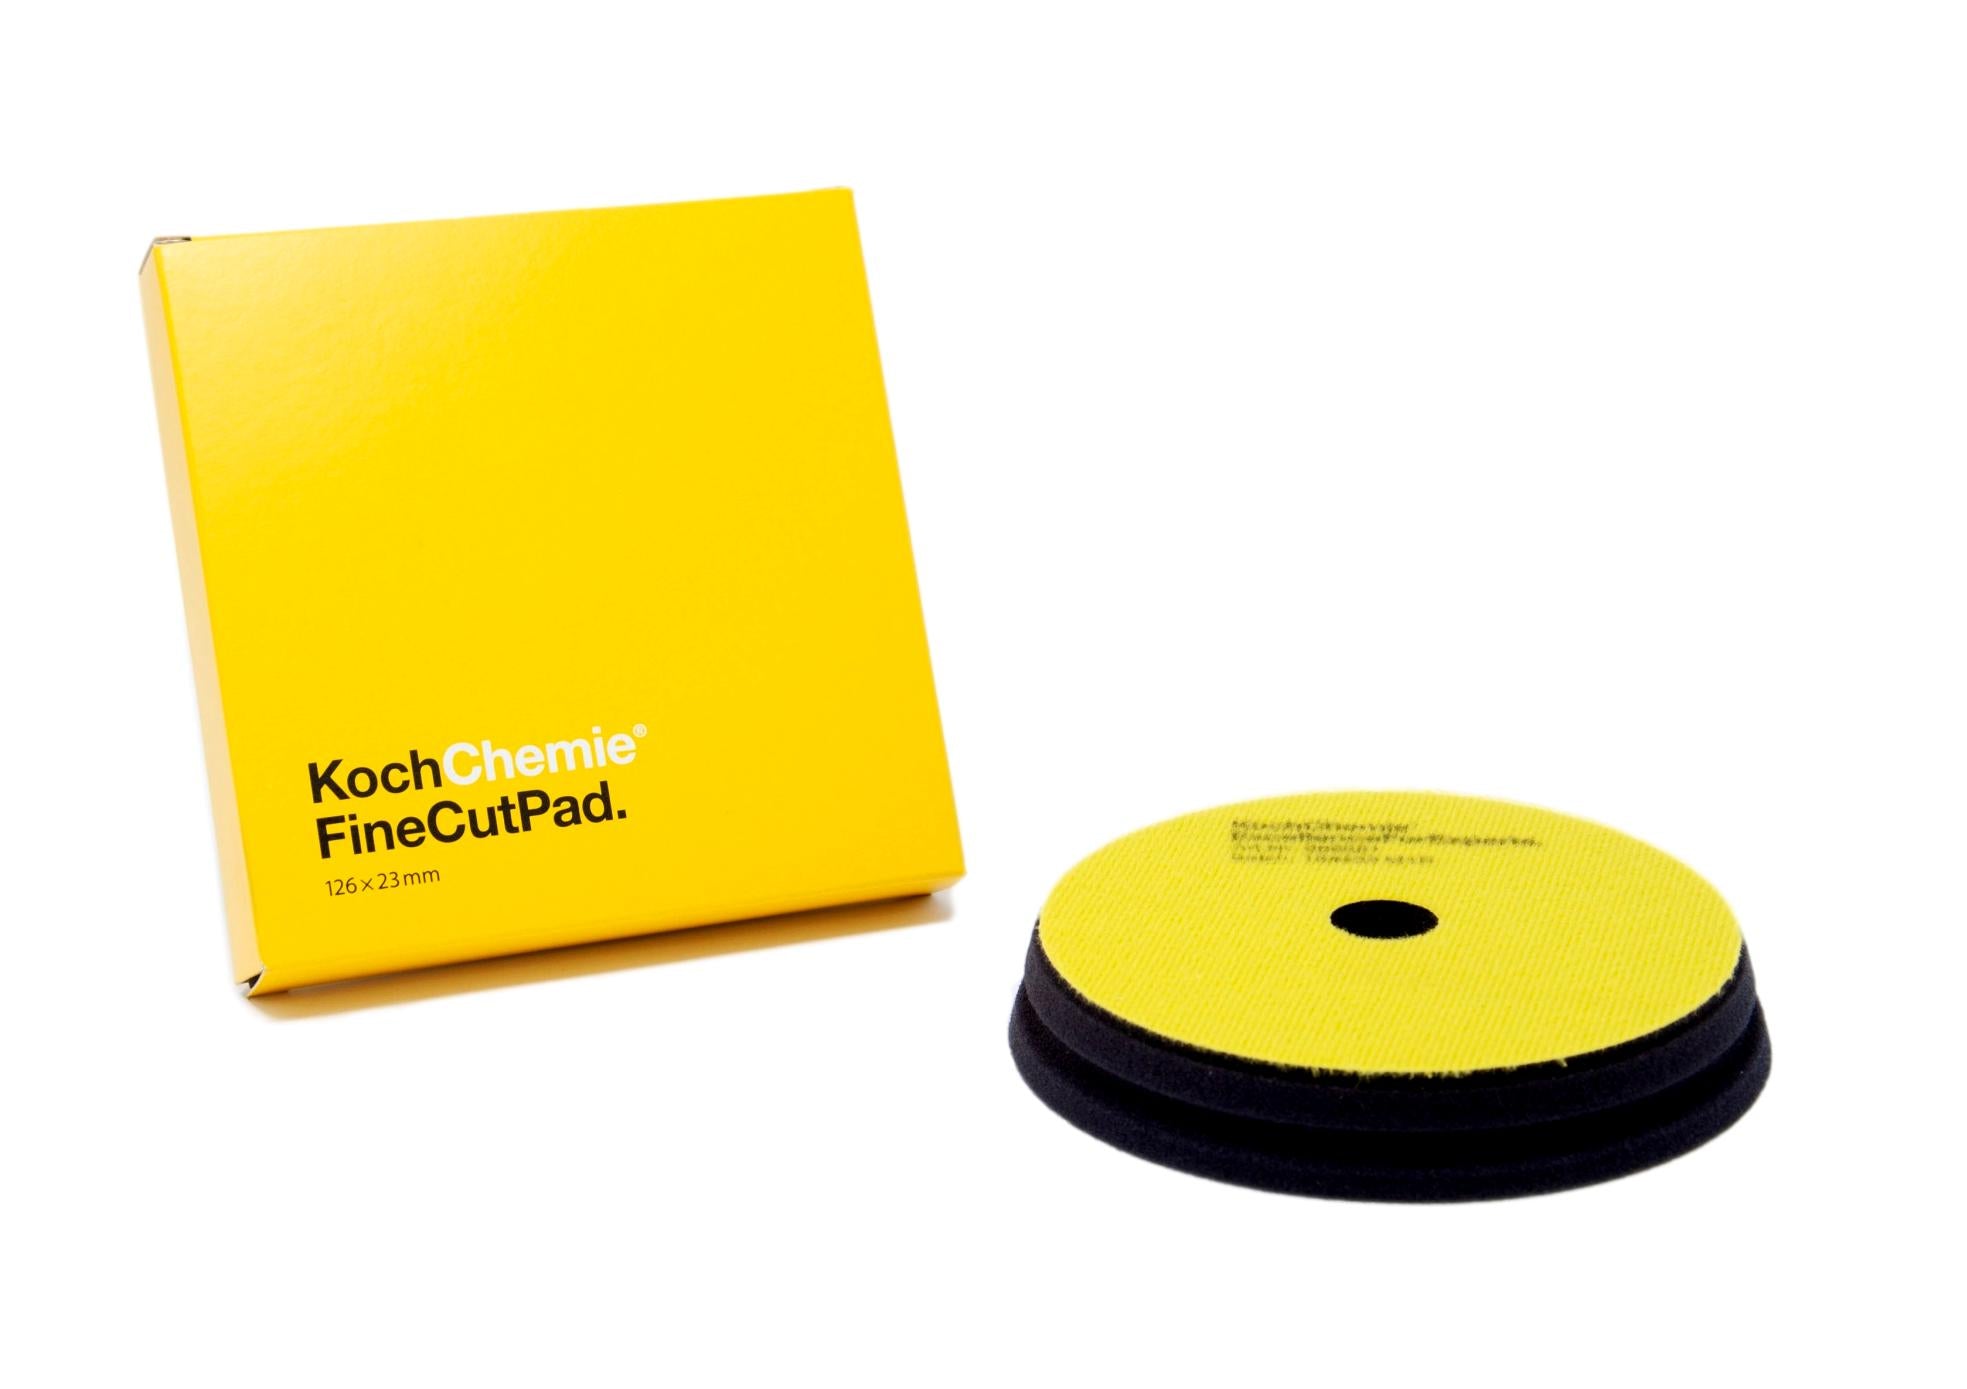 Koch Chemie F6 01 (Fine Cut Compound) 250ml